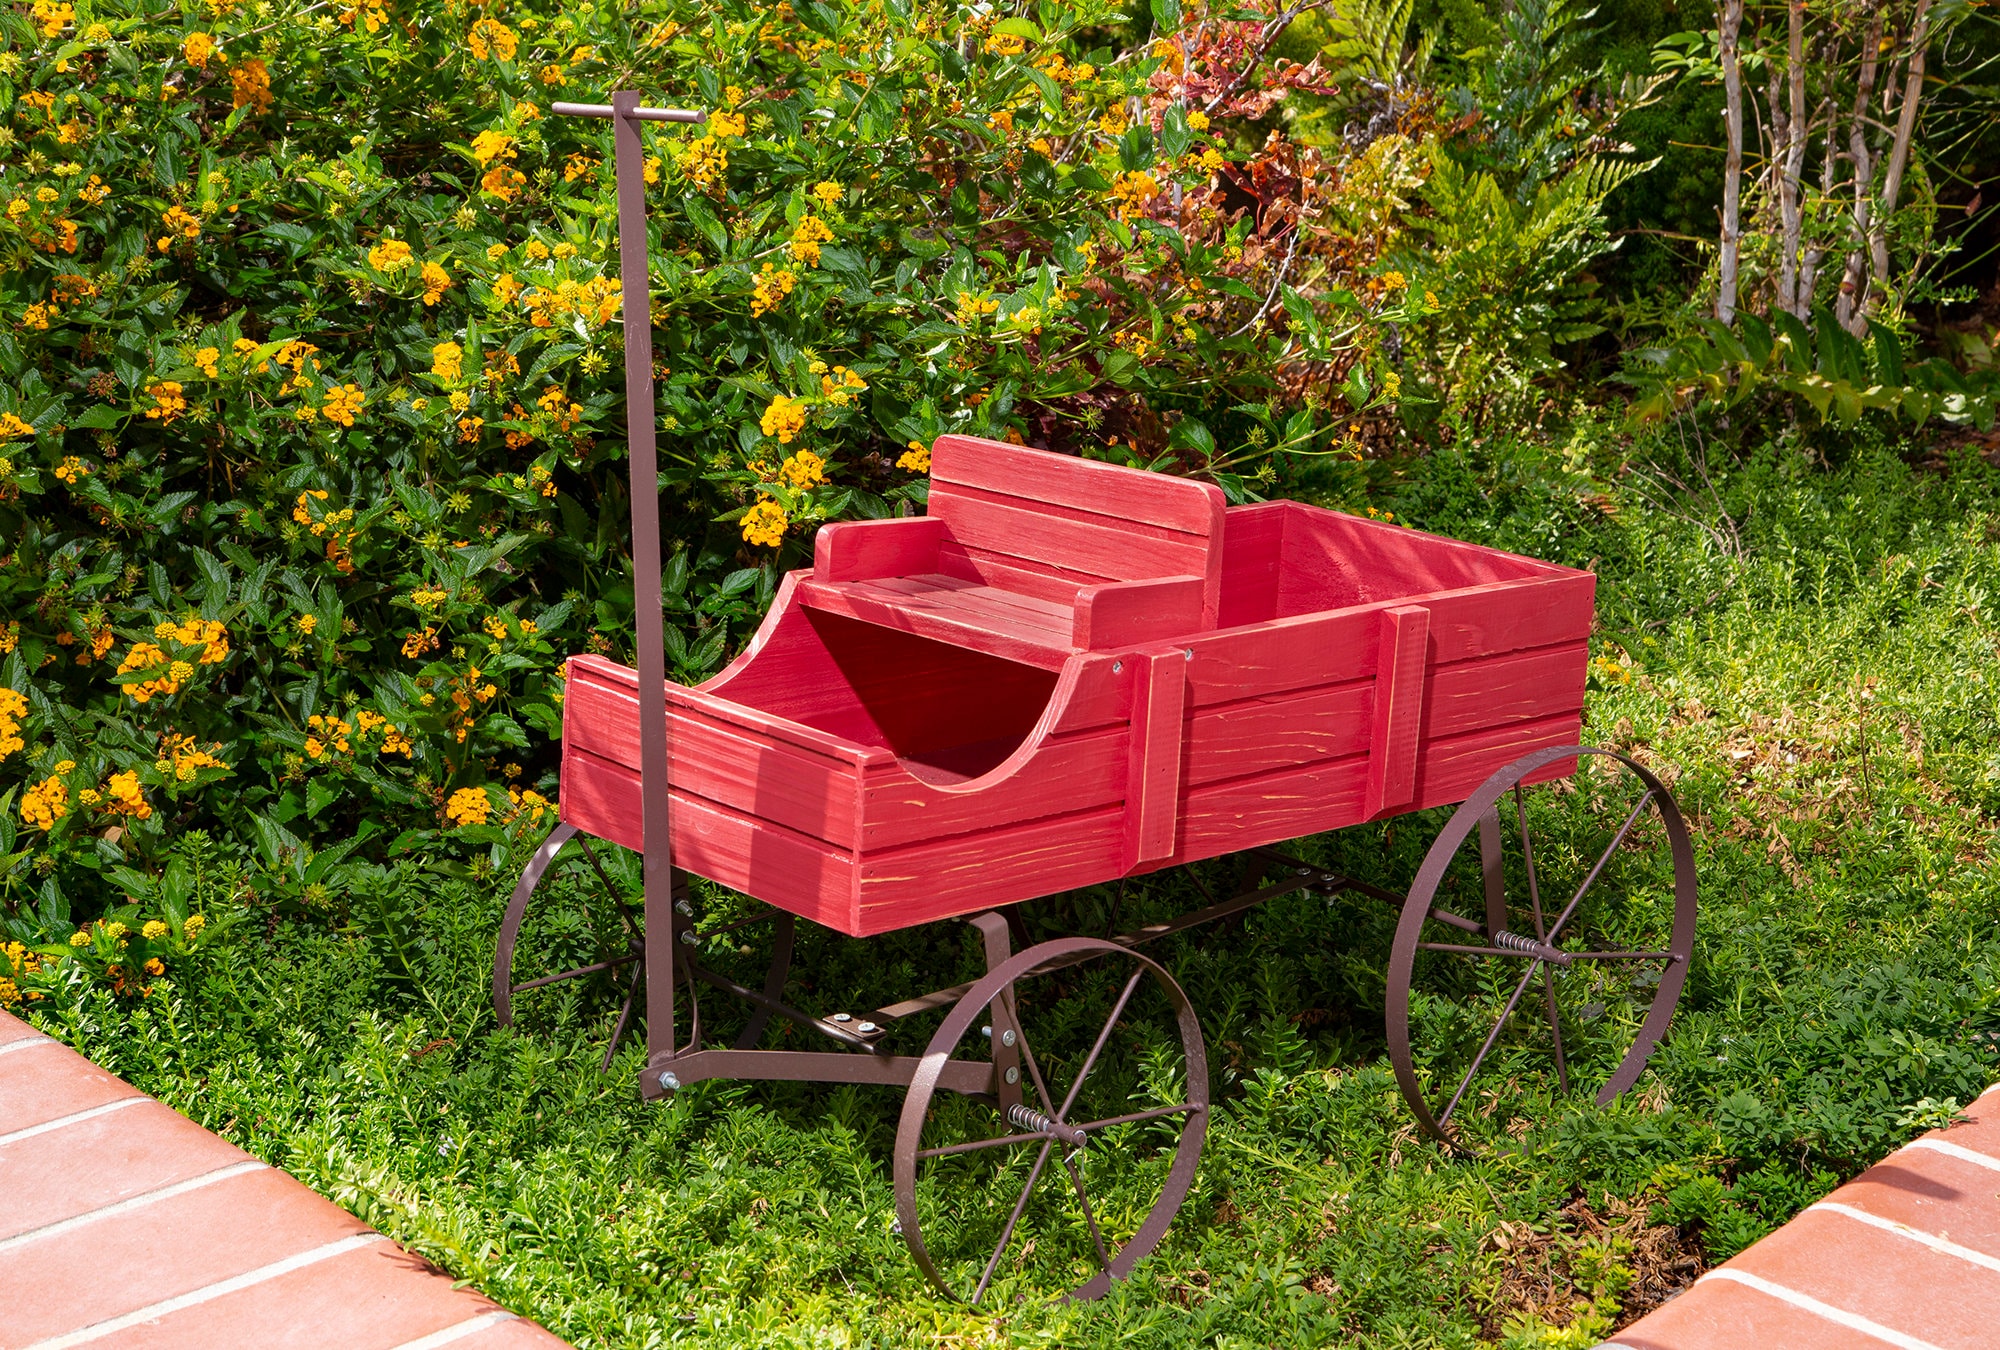 Small 21.5" Decorative Buckboard Wagon Planter, Cedar Wood, Classic Wooden Wagon, Amish Wagon Decorative Garden Planter #4941